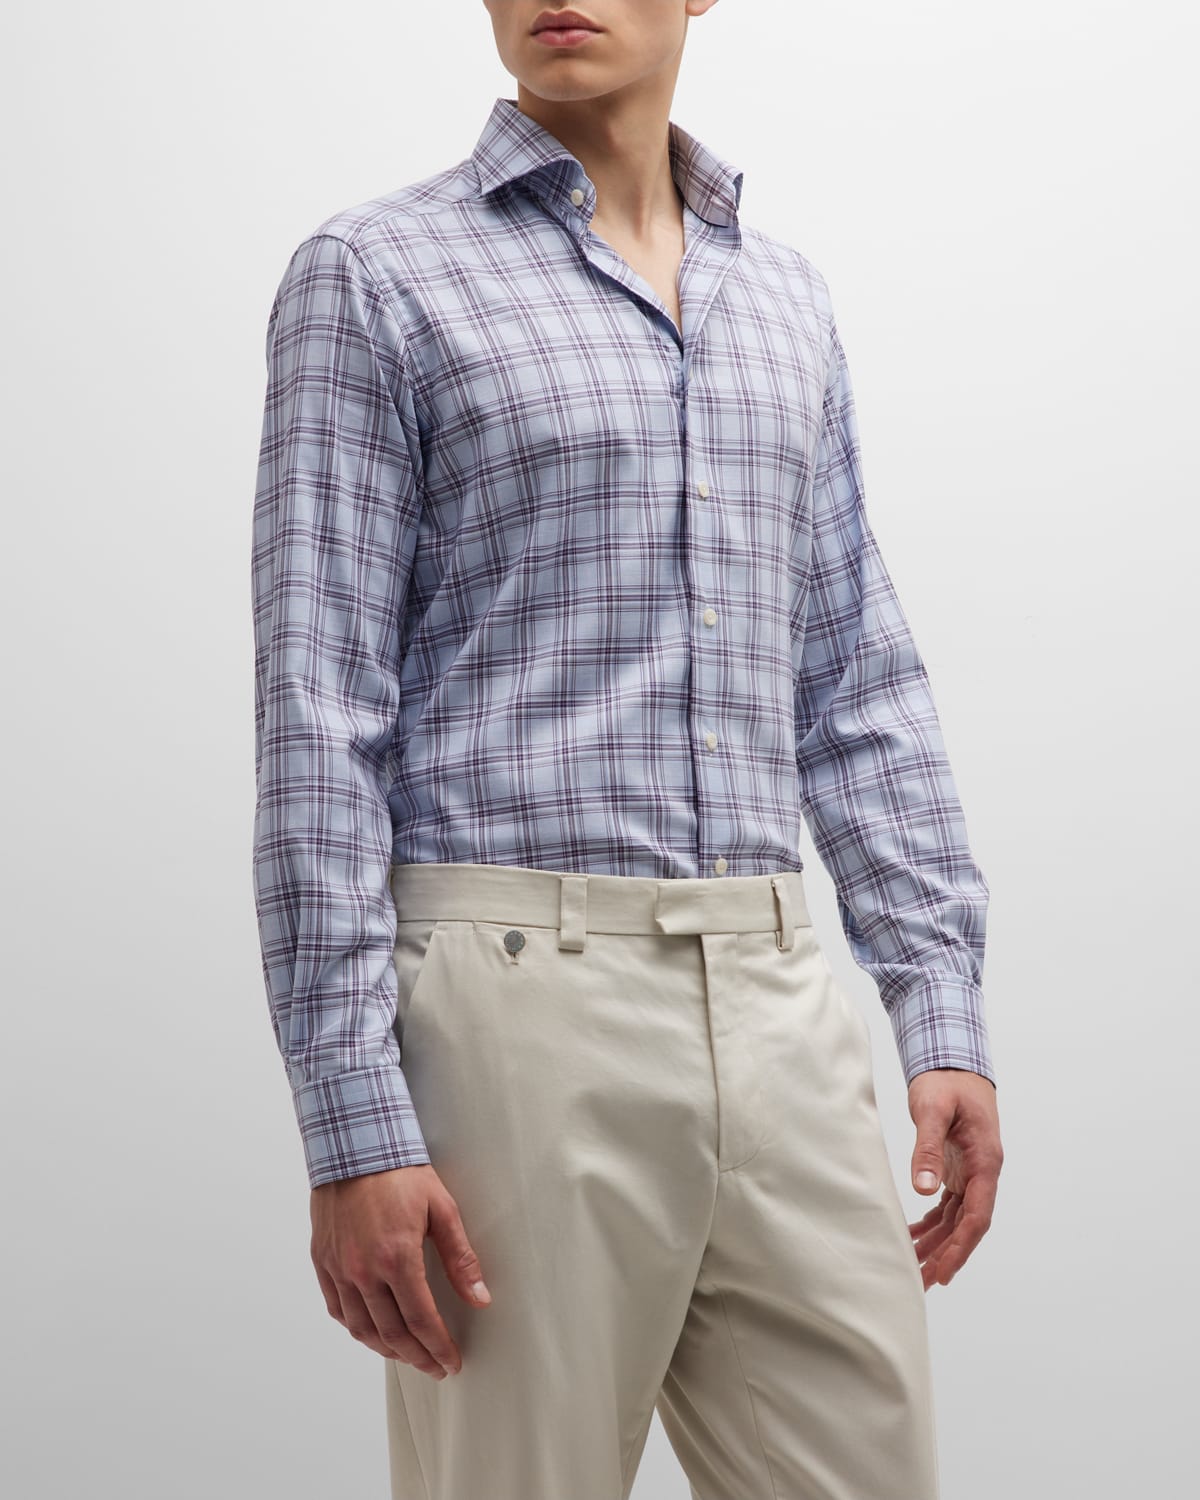 Men's Contemporary Fit Plaid Oxford Dress Shirt